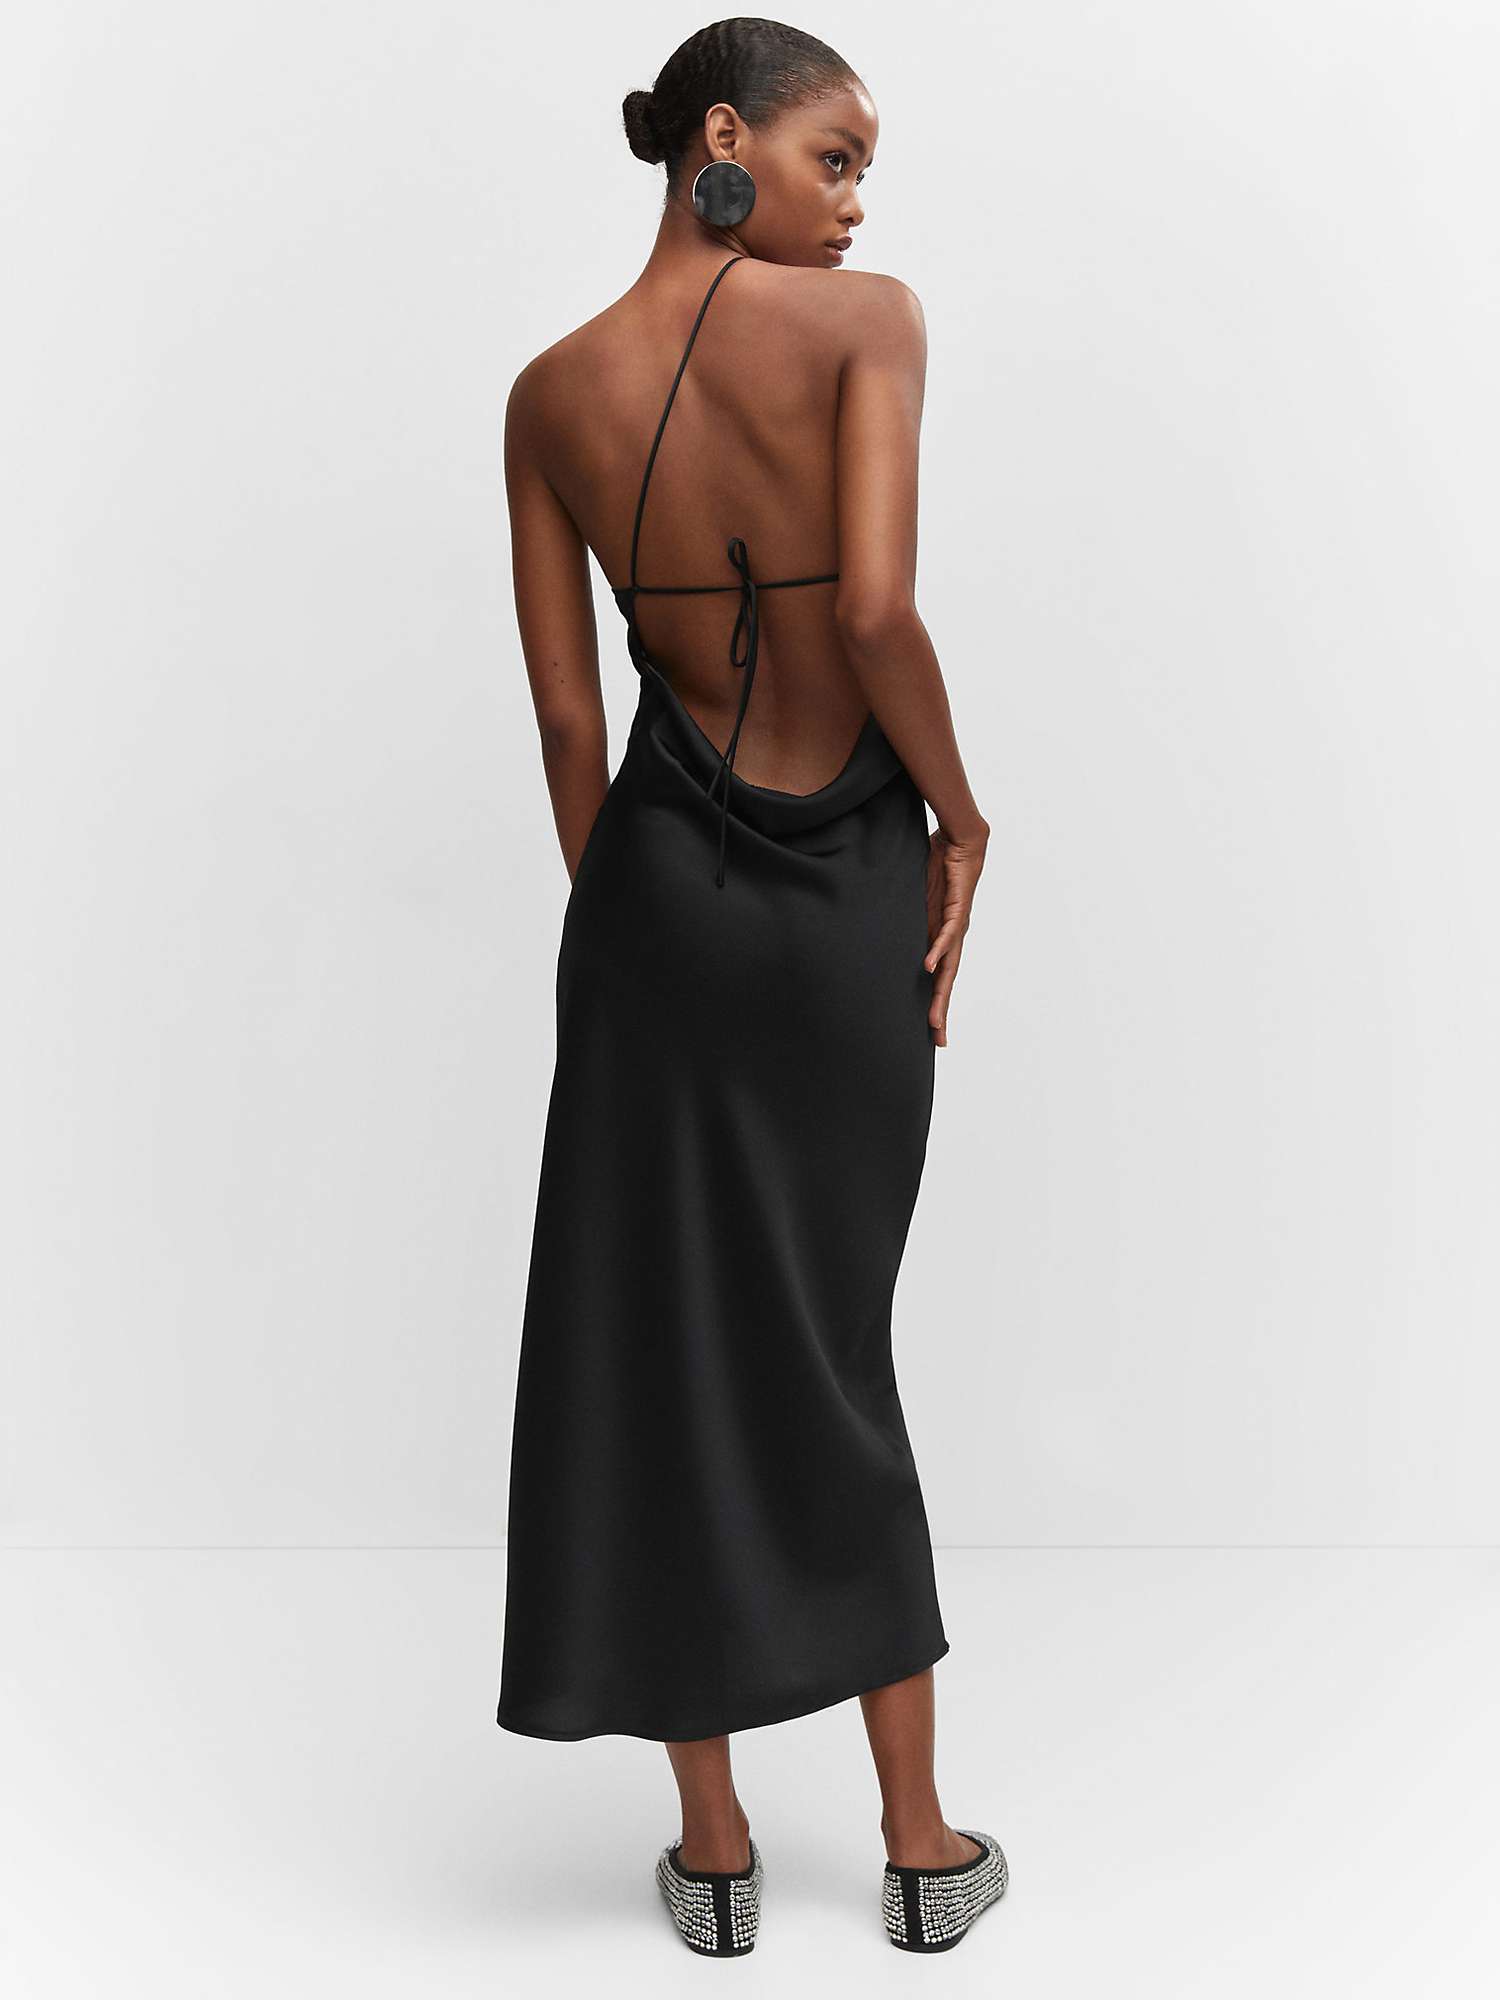 Mango Kira Open-back Satin-effect Dress, Black at John Lewis & Partners